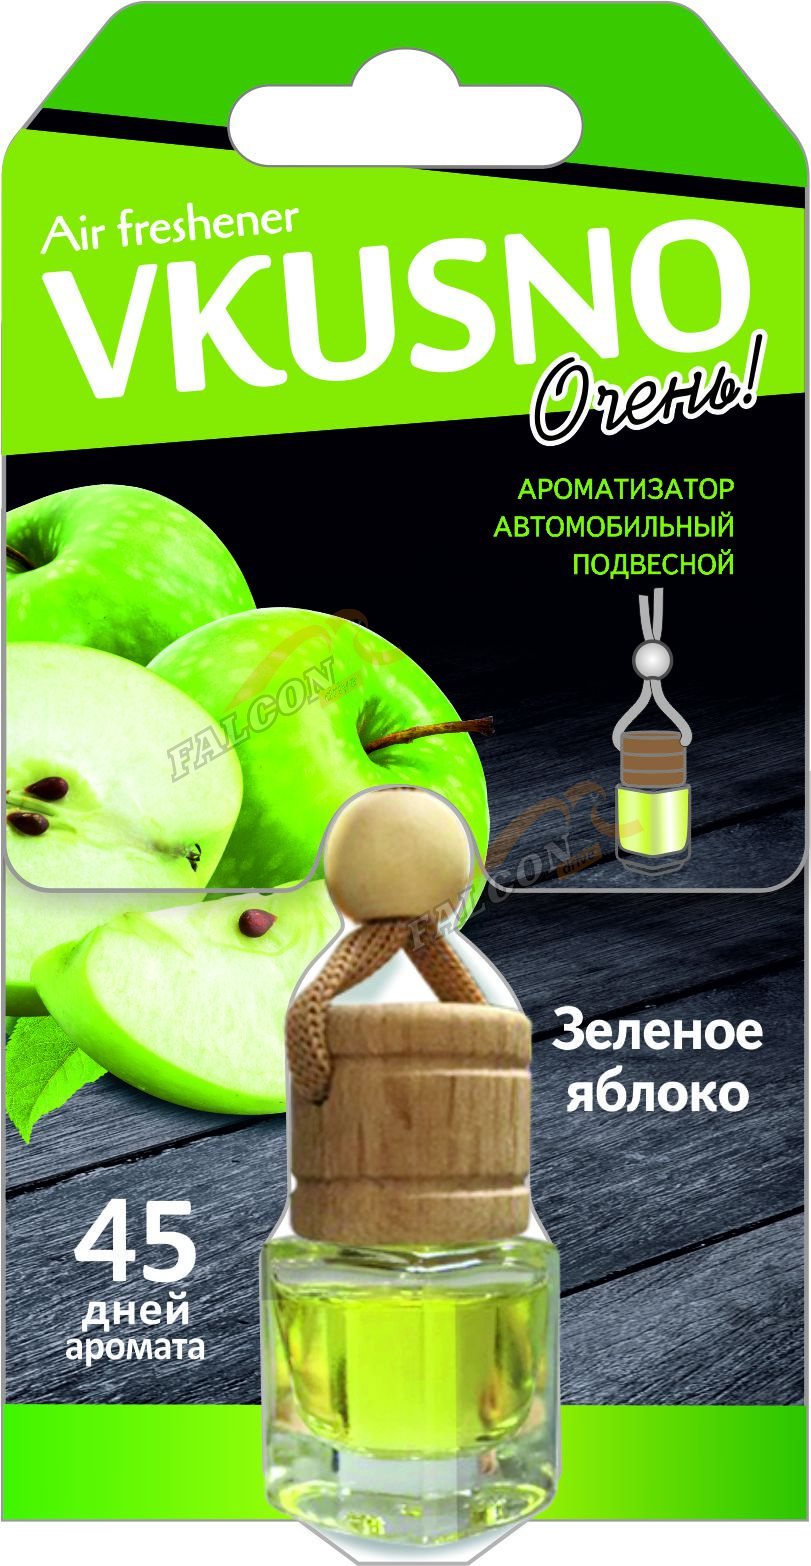 Ароматизатор подвес жидкий (FRESHCO) "Vkusno" Яблоко AR1VB001 дерево+стекло